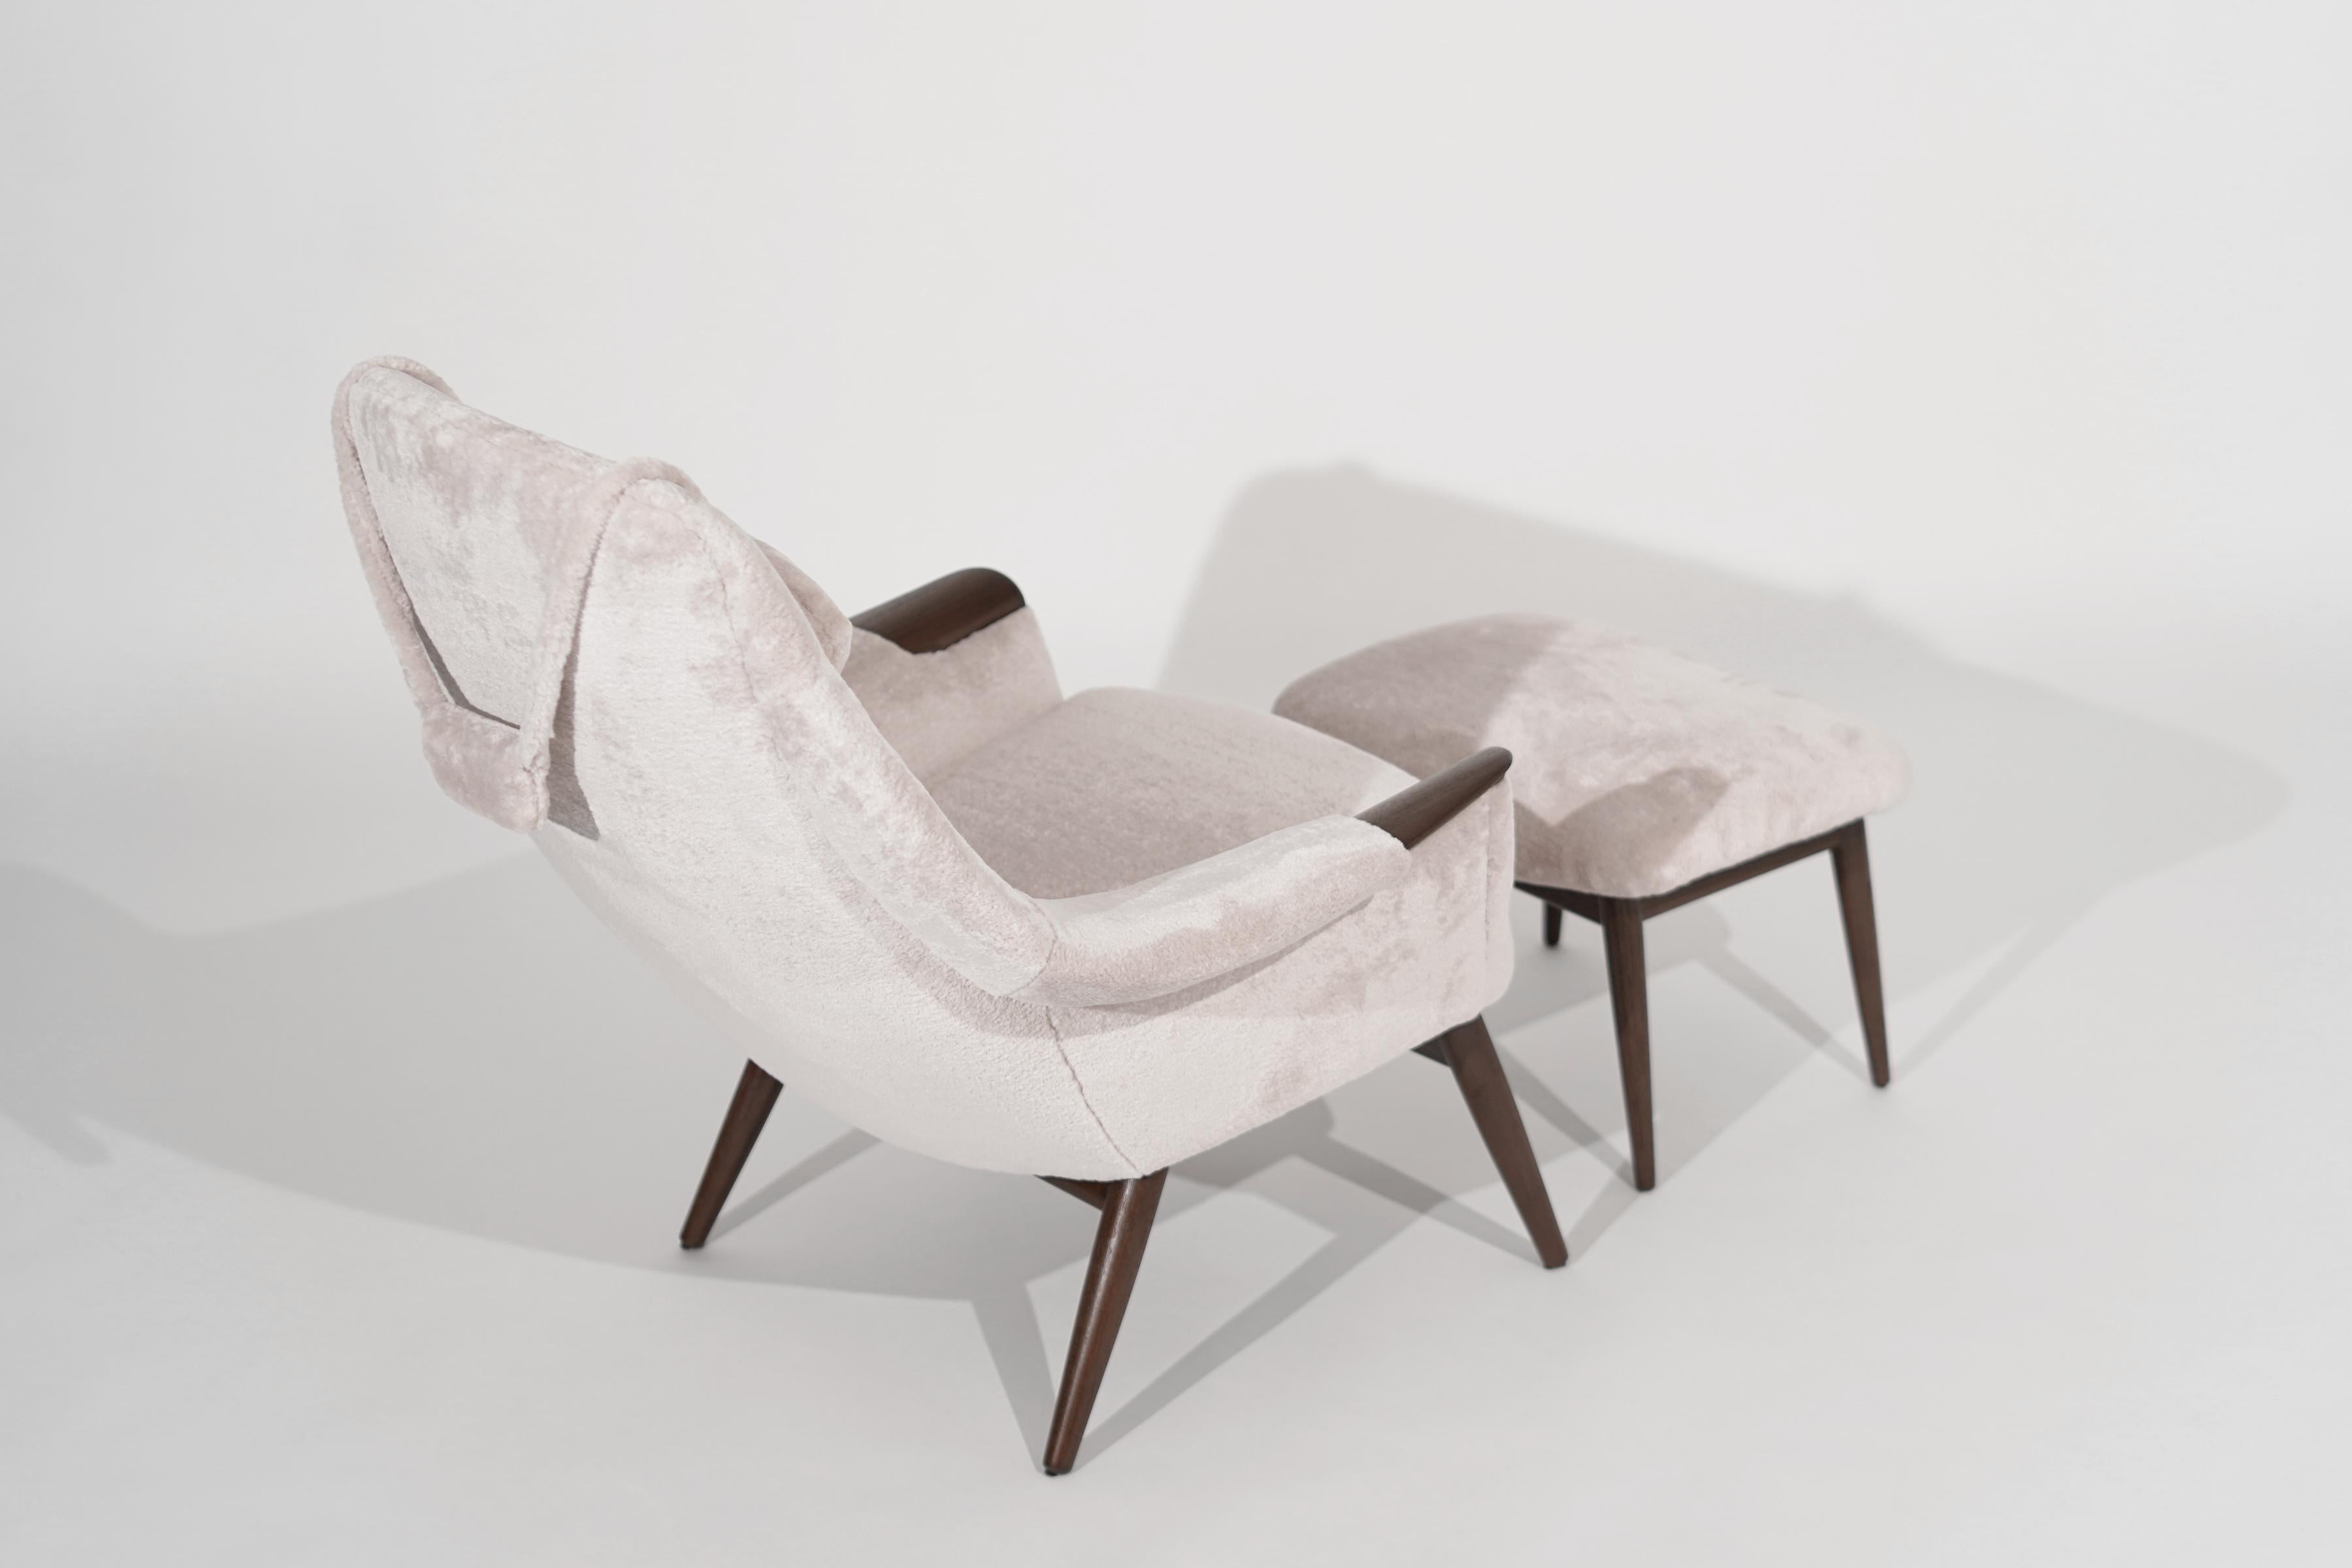 20th Century Scandinavian-Modern Lounge Chair and Footstool by Gerhard Berg, C. 1950